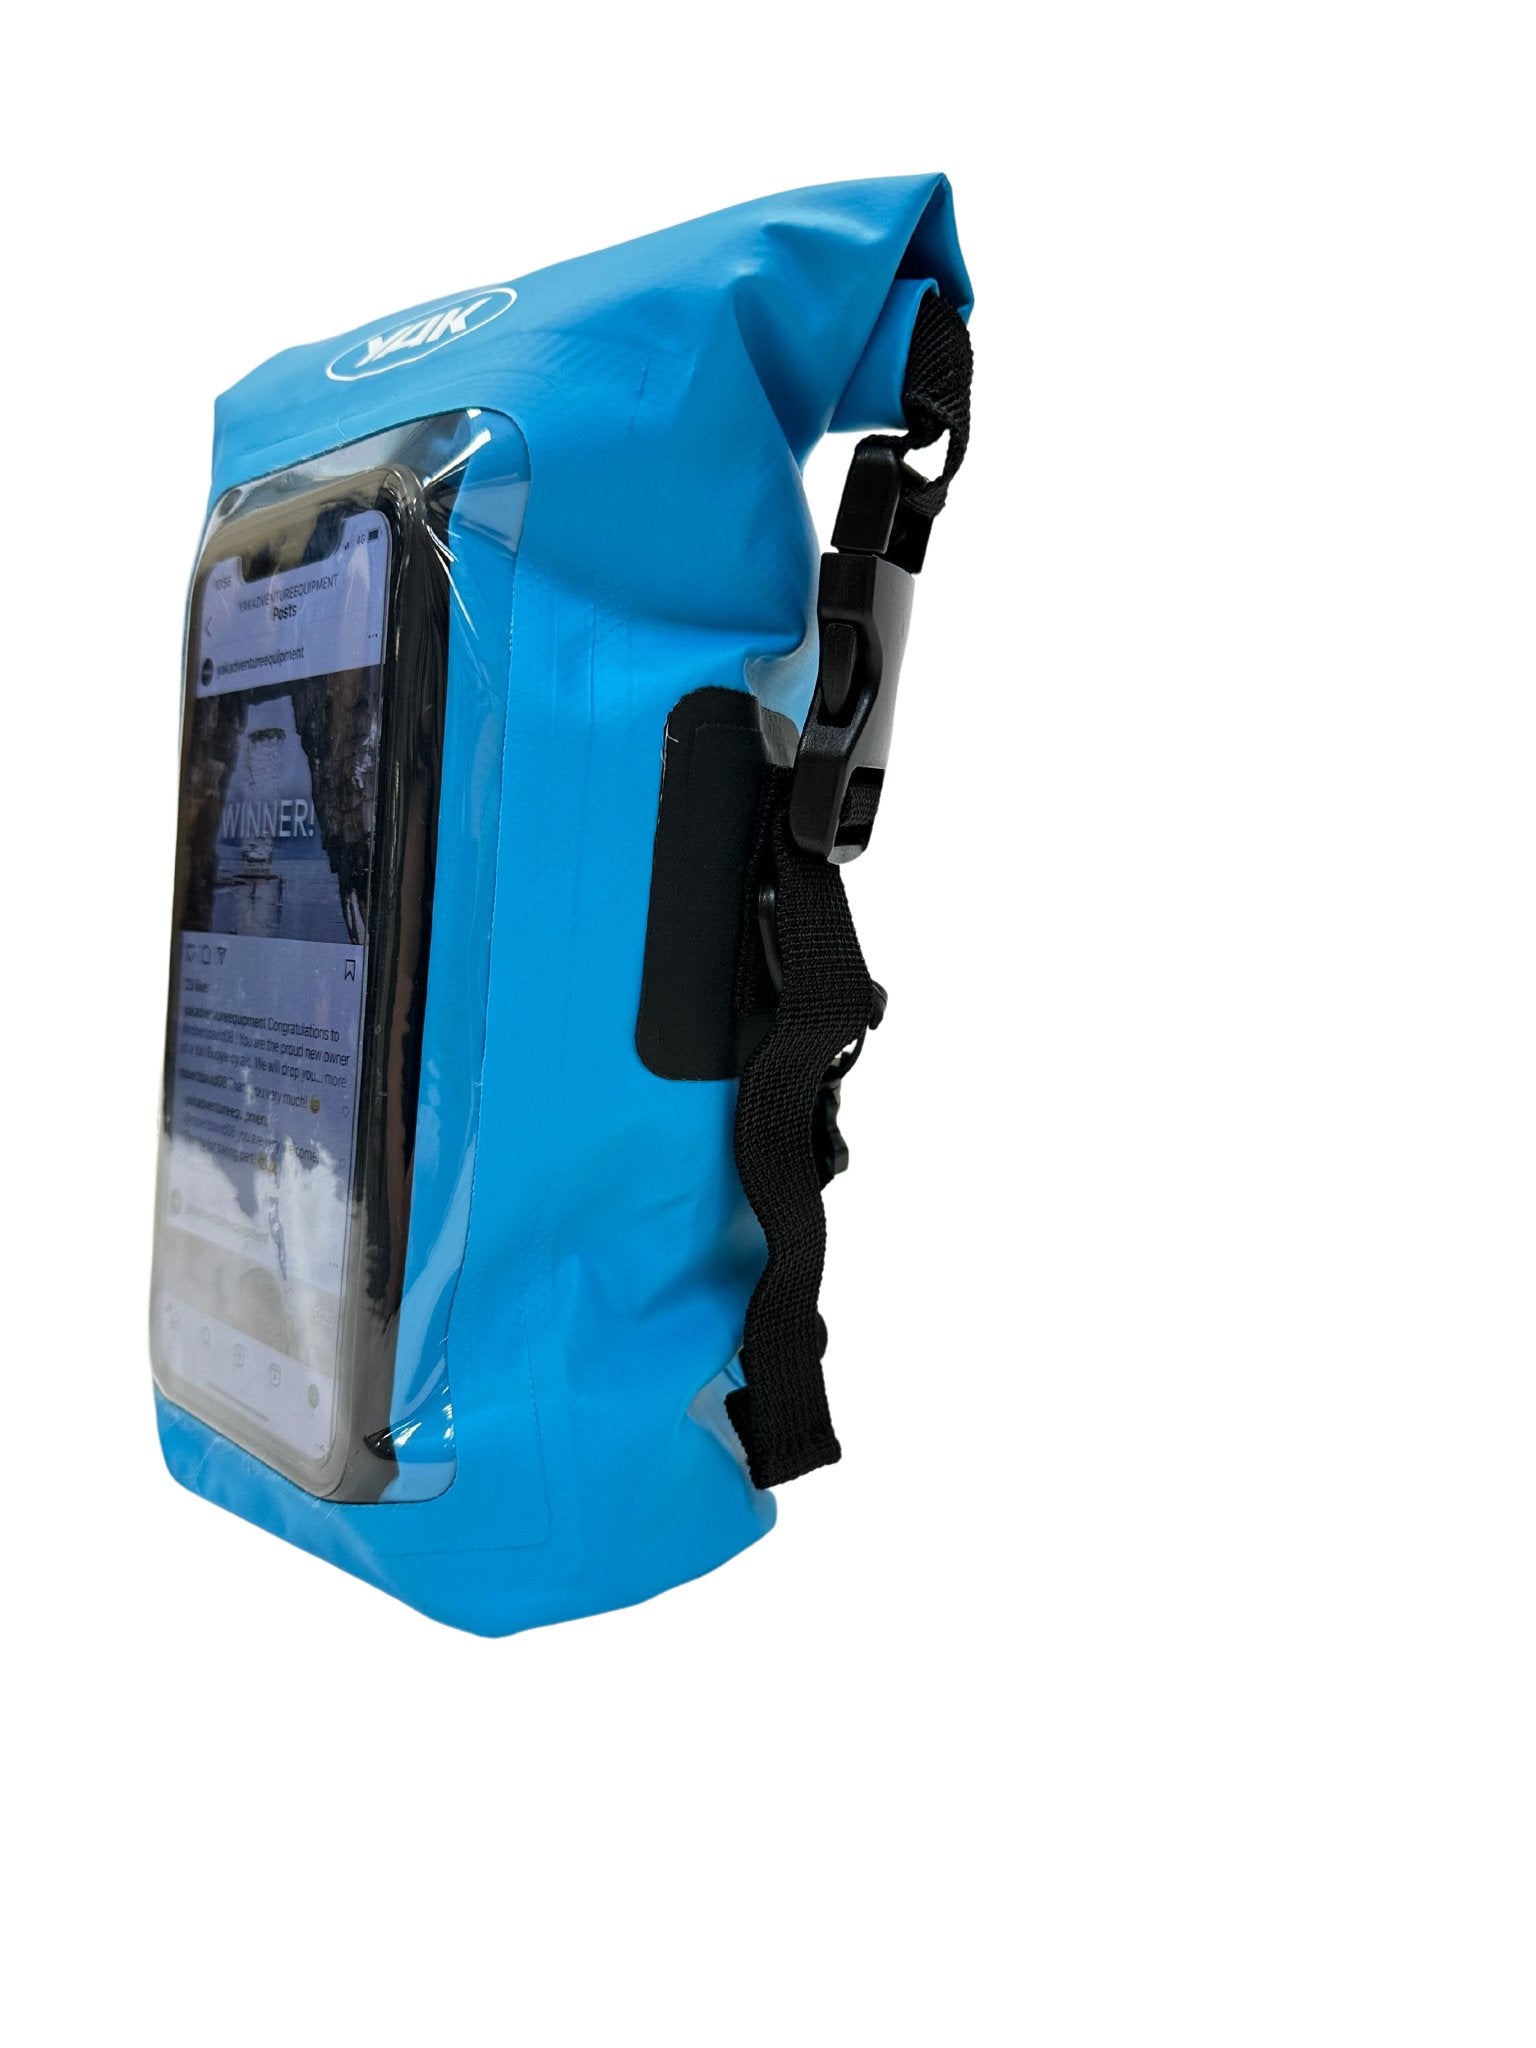 Yak Waterproof Phone Pouch - Worthing Watersports - 7003336 - Dry Bags - YAK